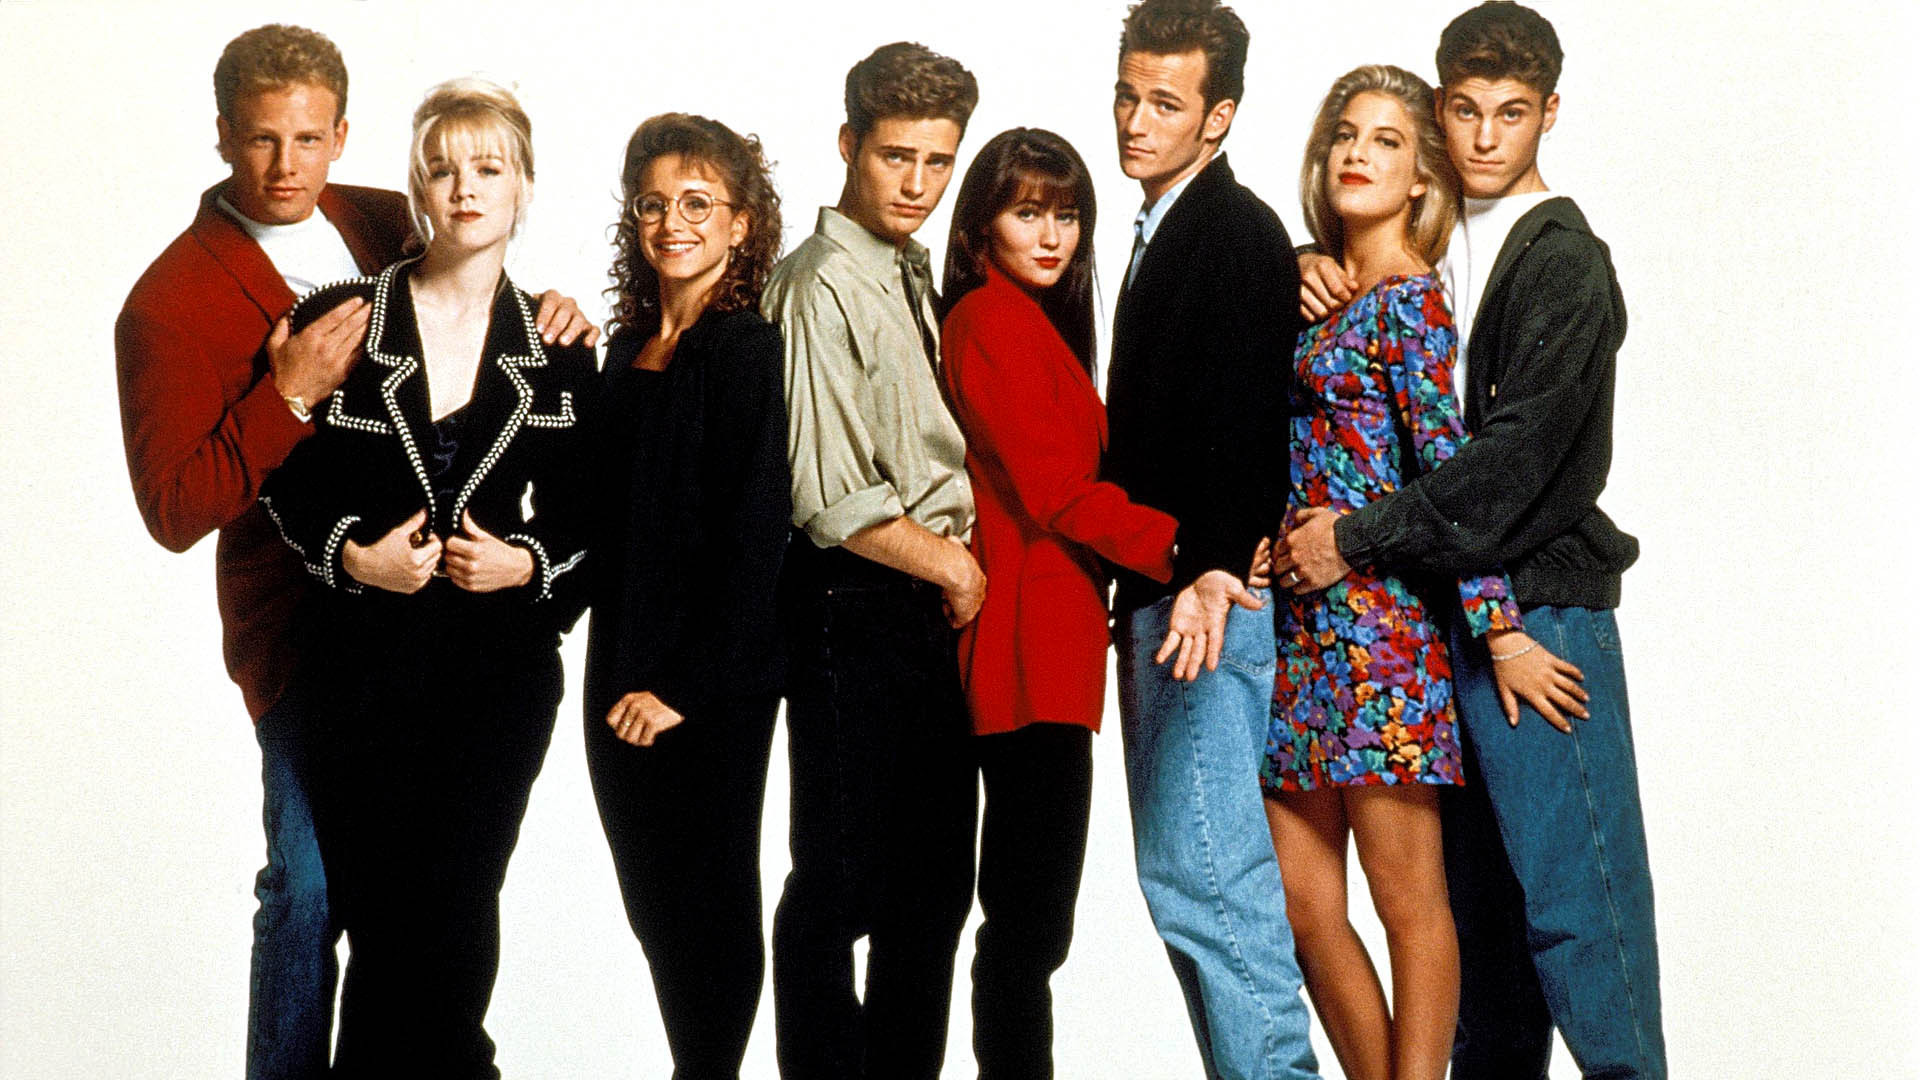 Беверли-Хиллз 90210 – 4 сезон 1 серия «До встречи, пока, до свидания, прощай» / Beverly Hills, 90210